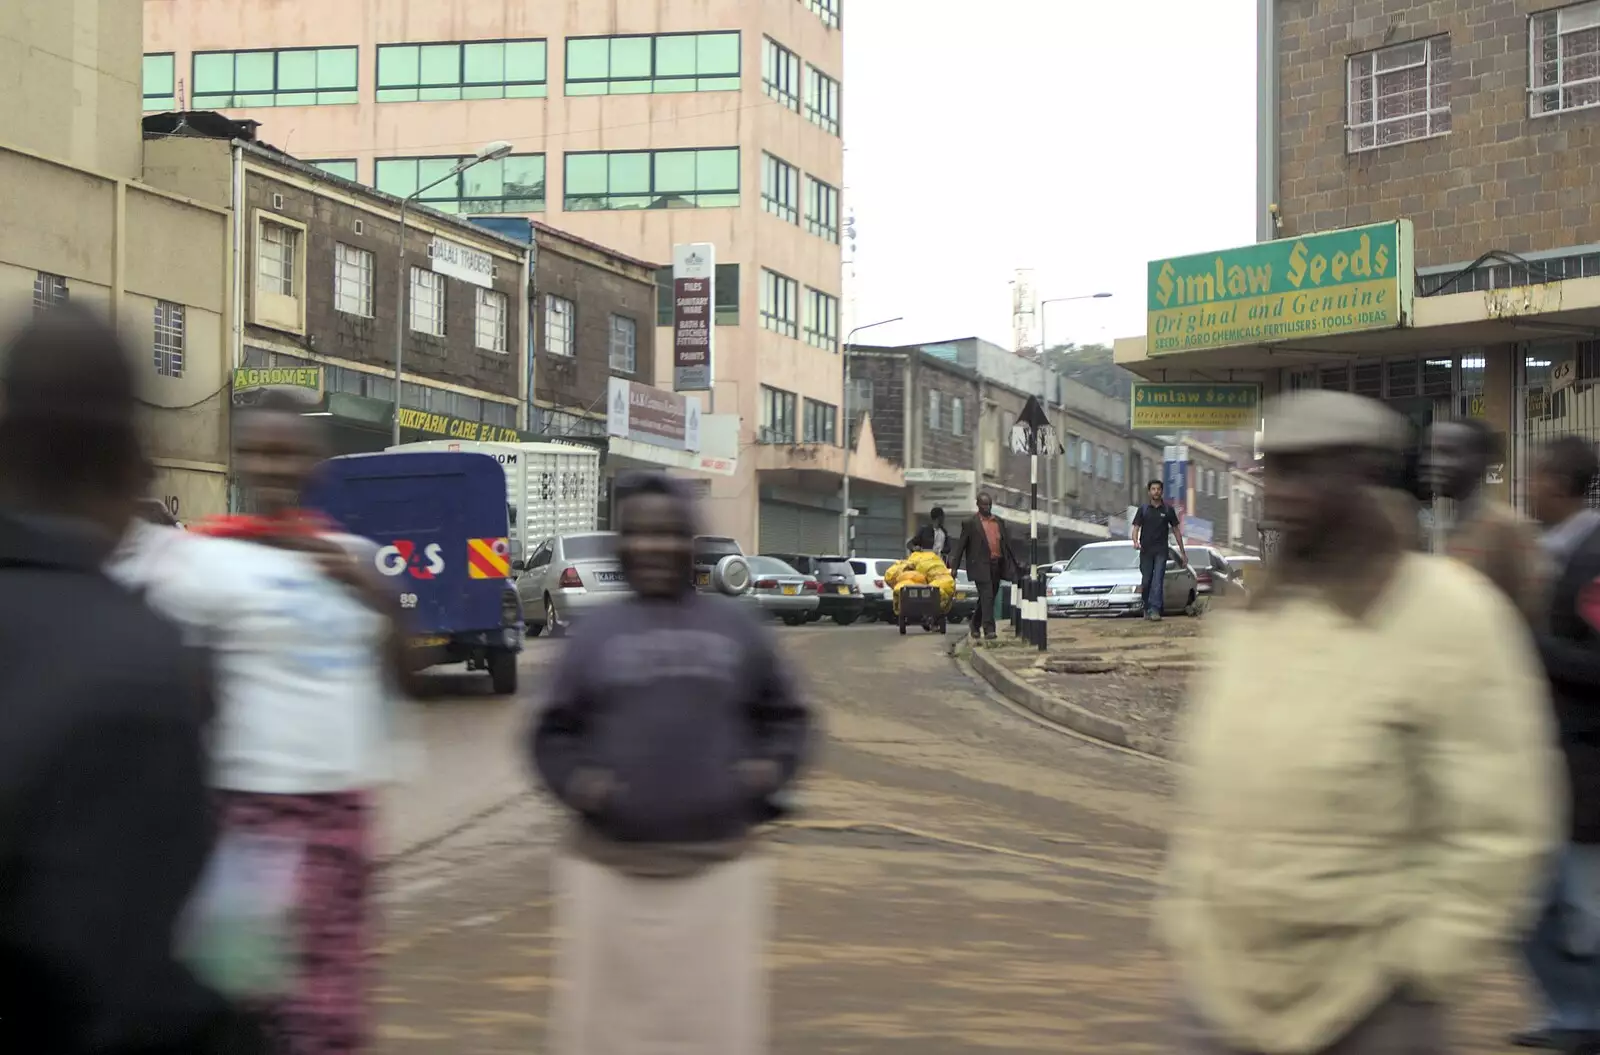 Street scene, from Nairobi and the Road to Maasai Mara, Kenya, Africa - 1st November 2010